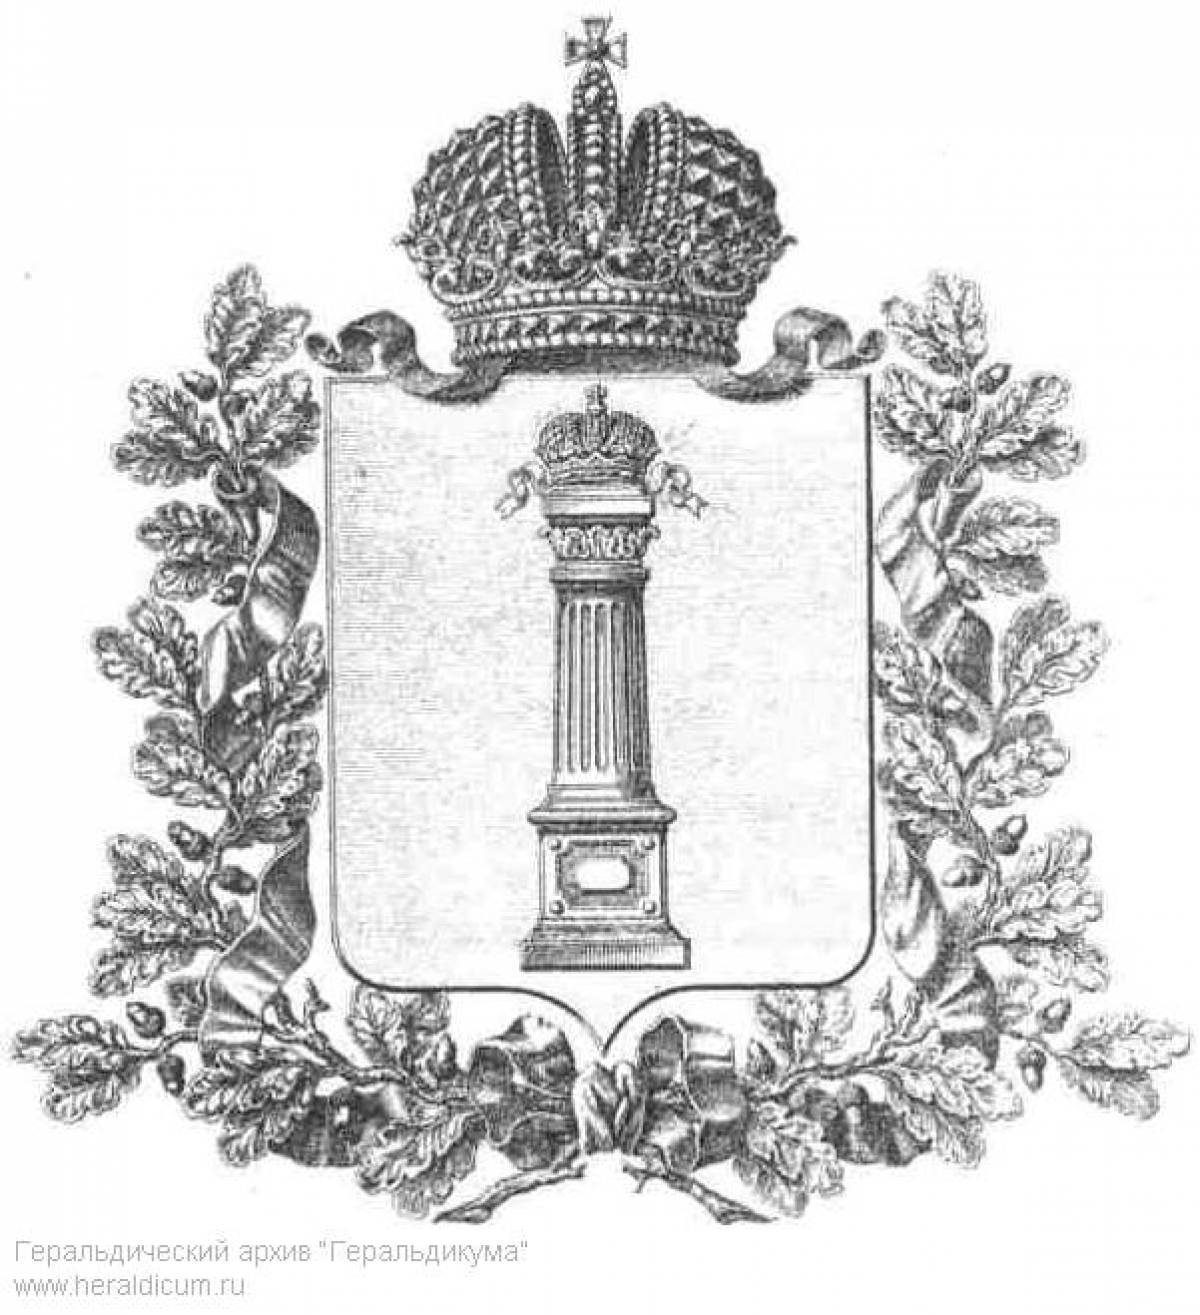 Luminous coat of arms of the Ulyanovsk region